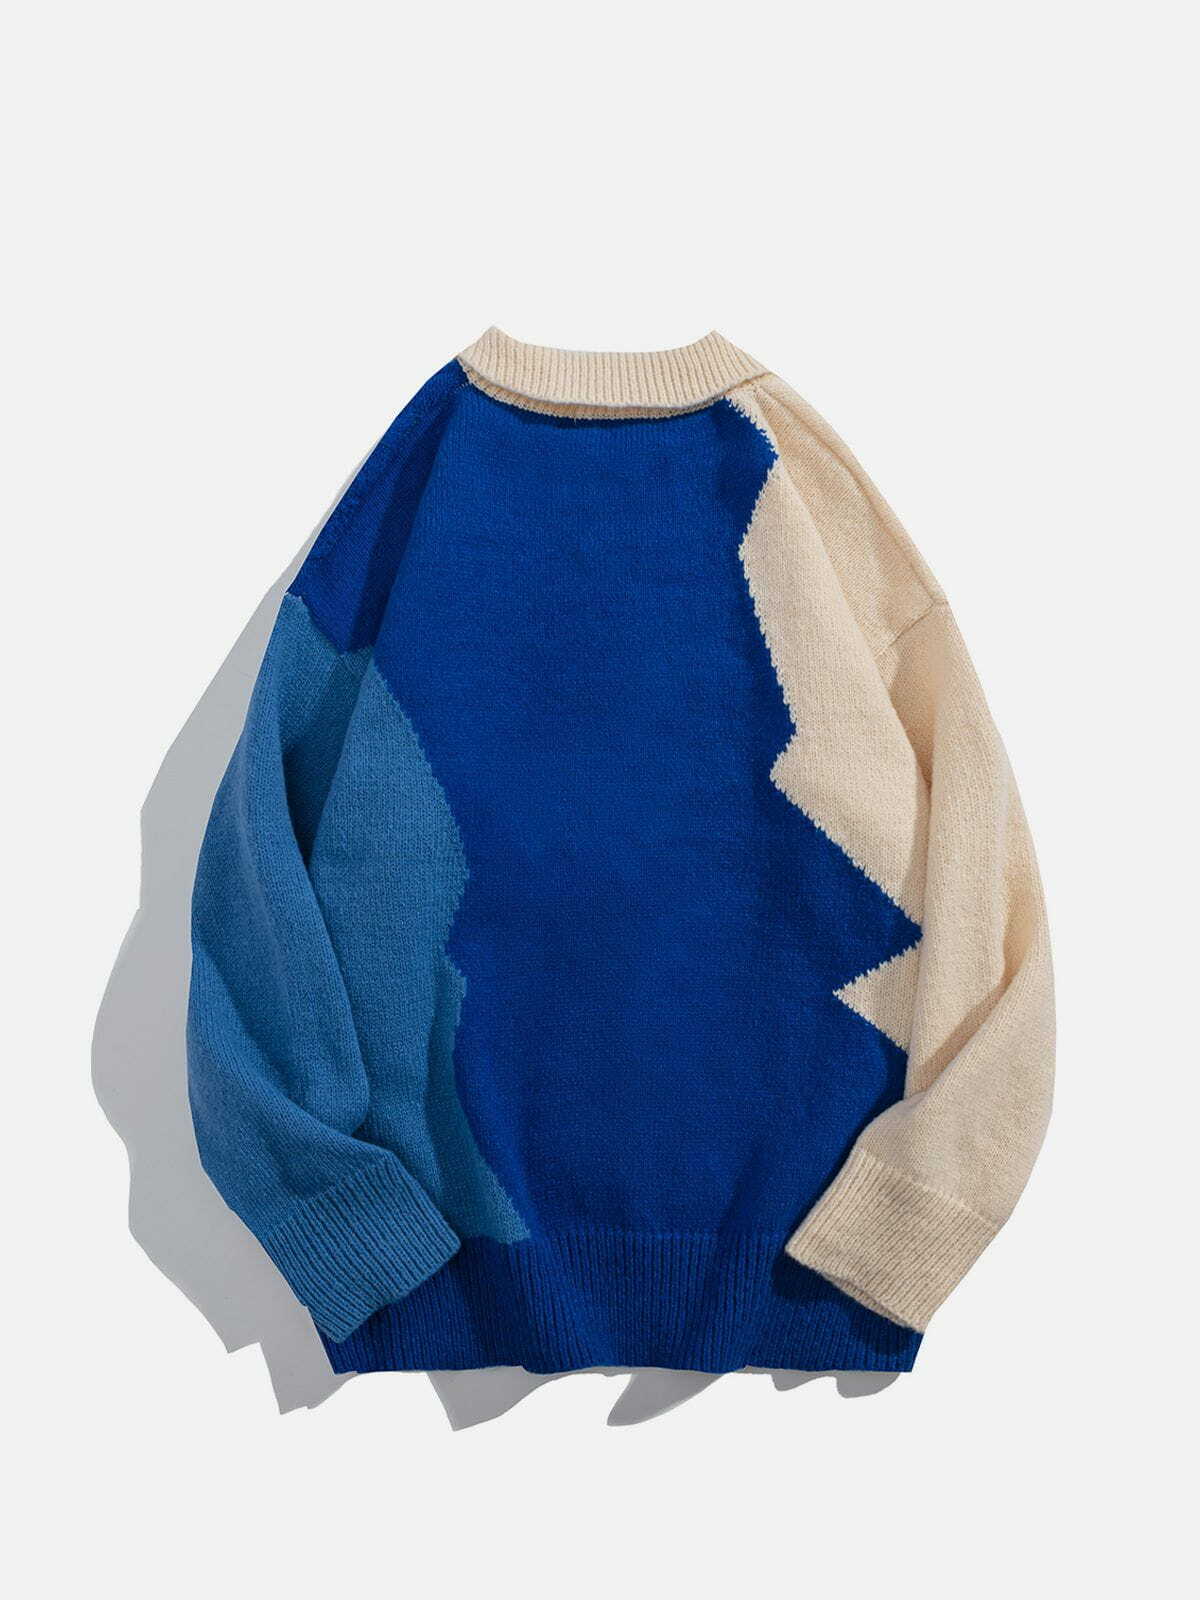 patchwork polo collar sweater edgy urban y2k fashion 4659